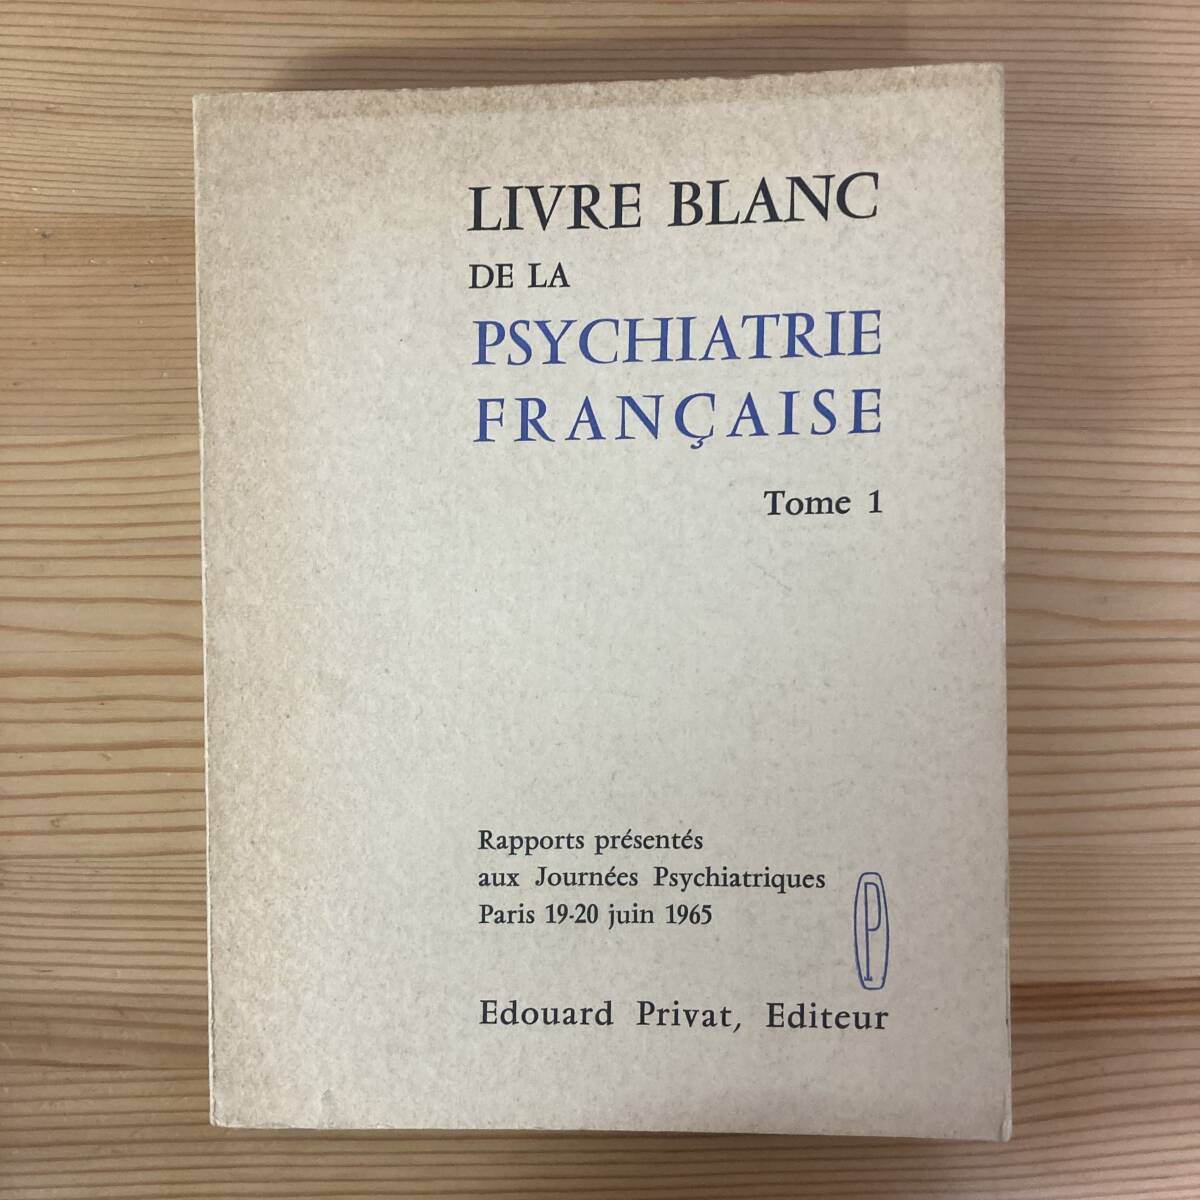 【仏語洋書】LIVRE BLANC DE LA PSYCHIATRIE FRANCAISE Tome 1【精神医学】_画像1